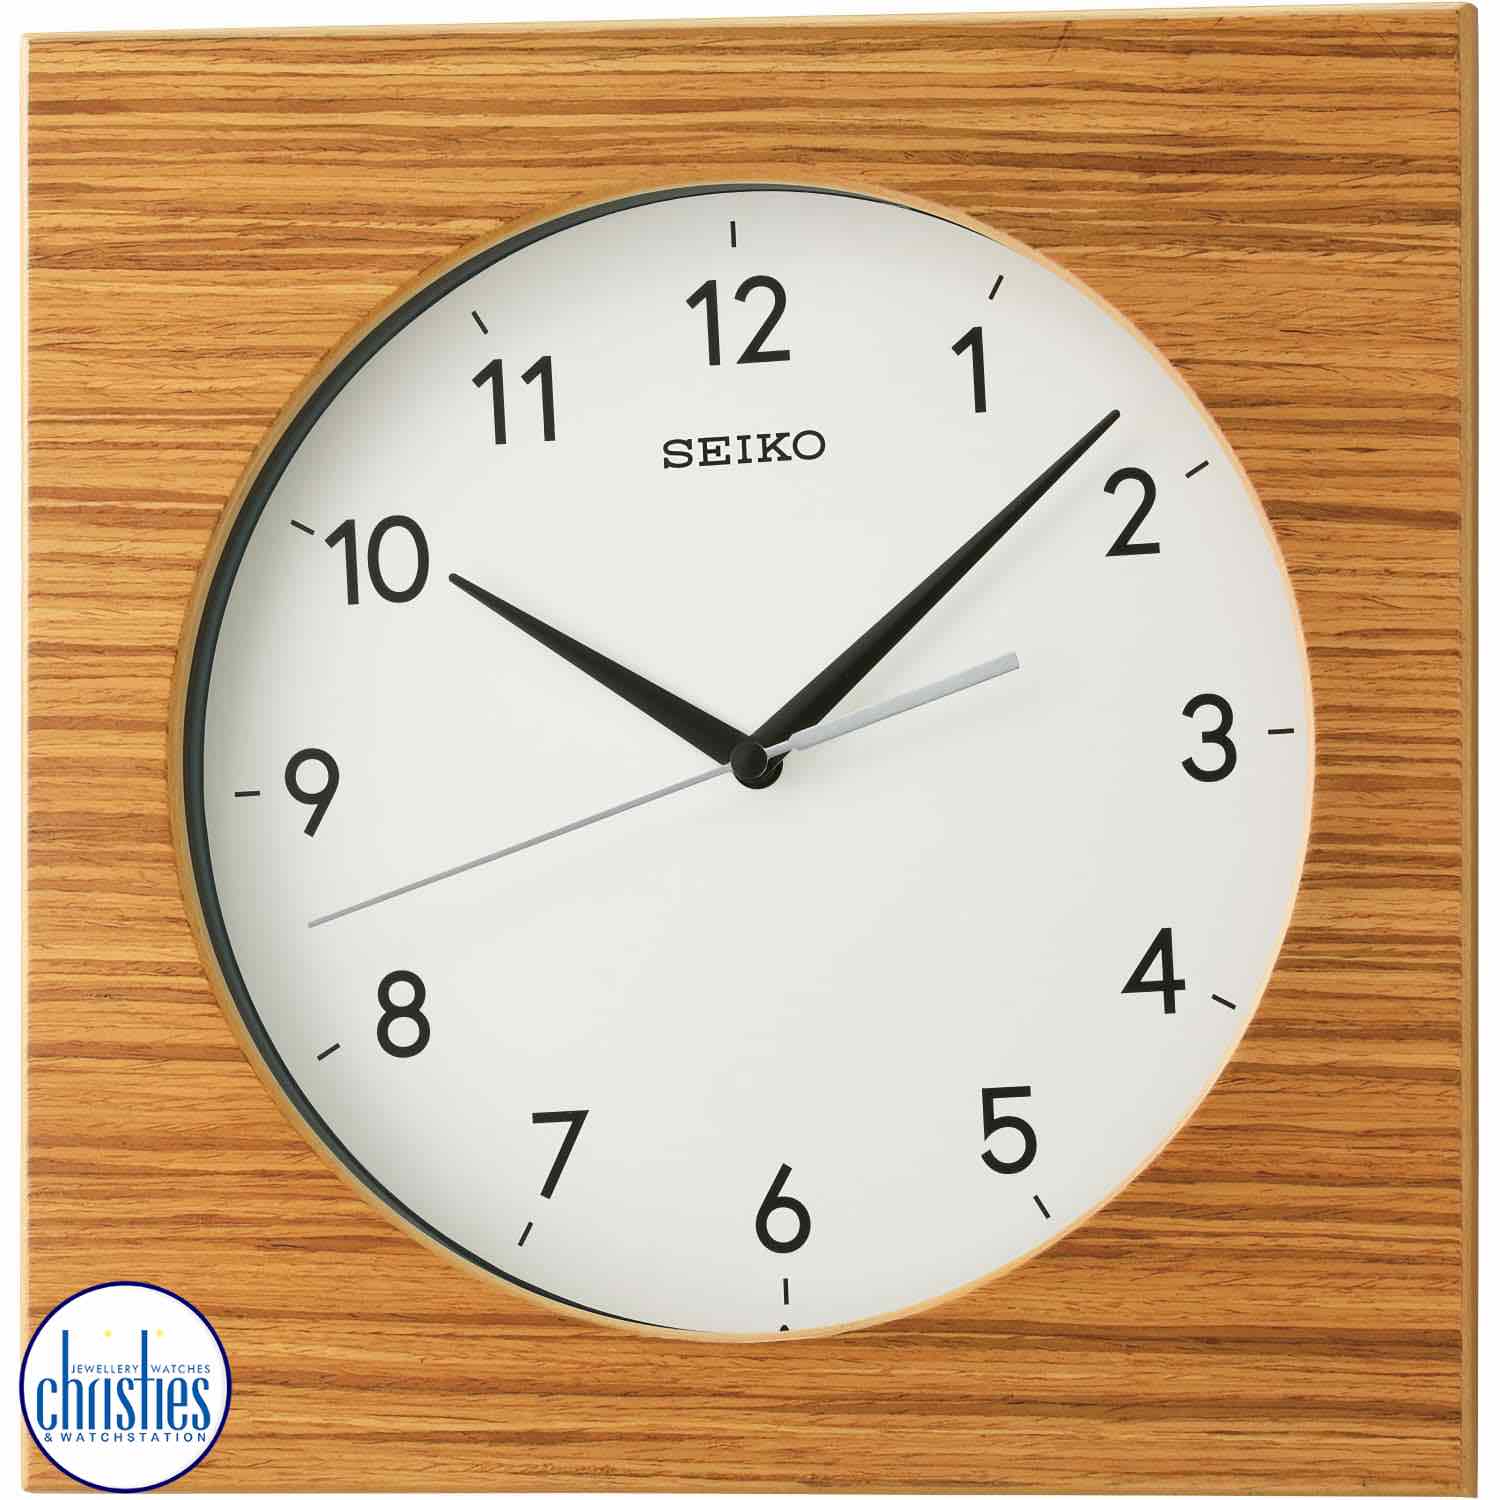 QXA766-B Seiko Wall Clock Zebra Wood Veneer. The SEIKO WALL CLOCK QXA766-B is a stylish and functional addition to any home or office.